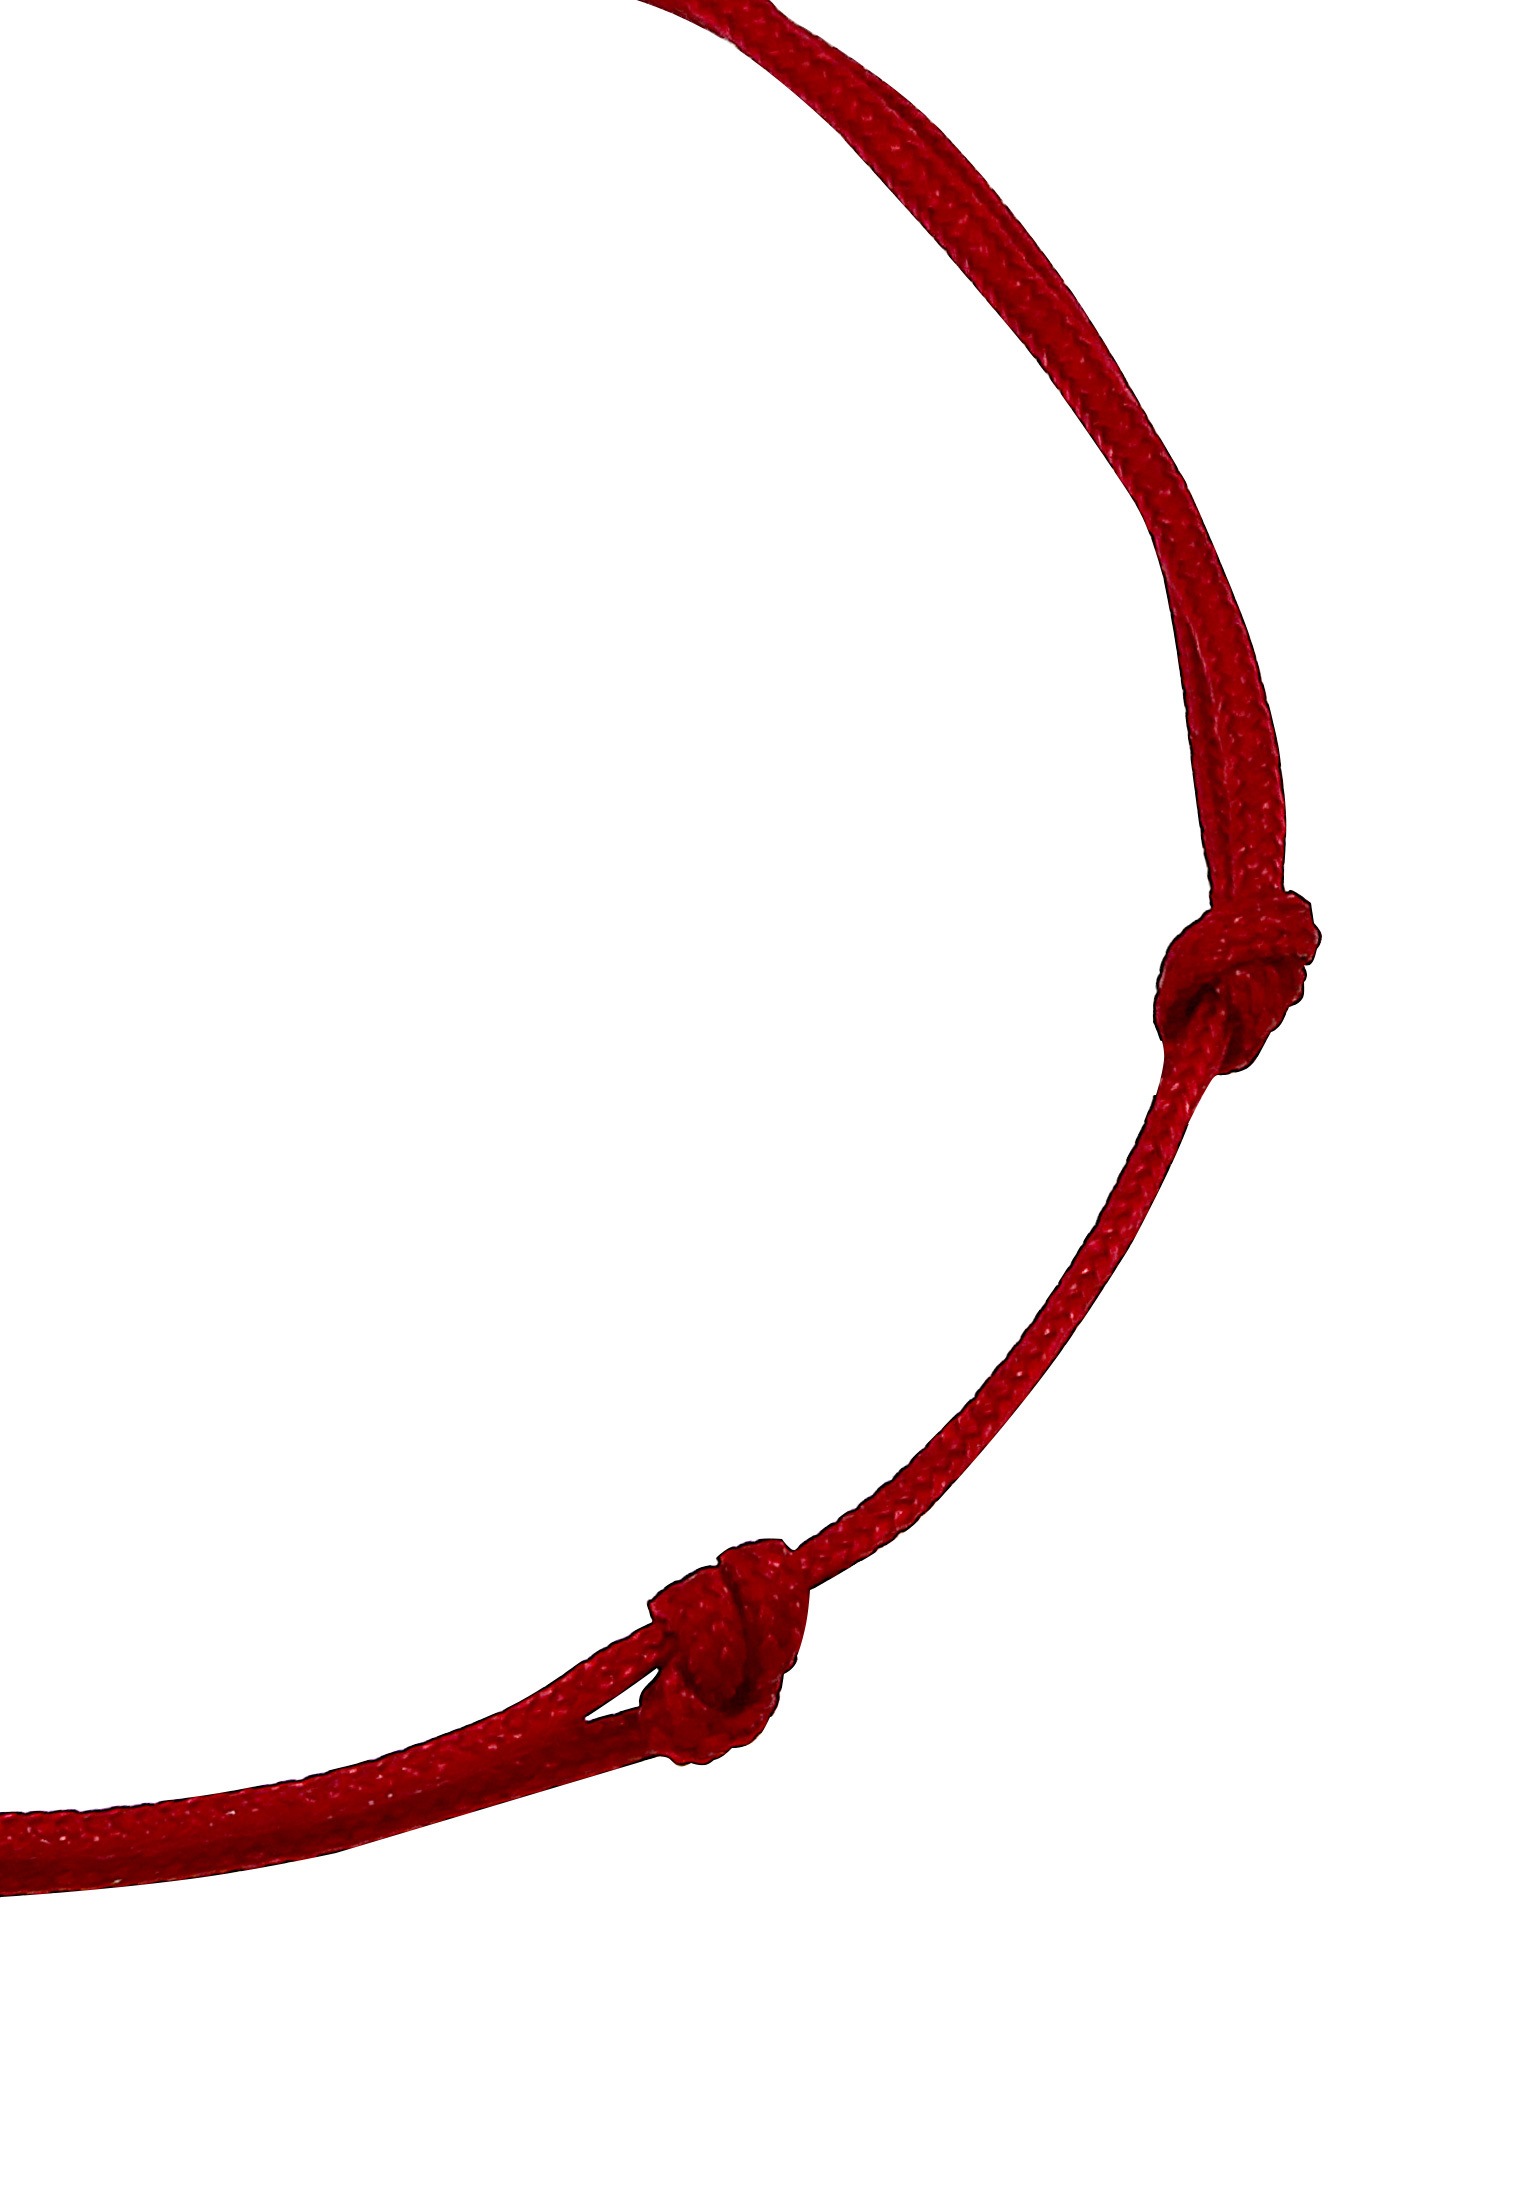 Elli Armband »Figaro-Kette Rot Nylon Verstellbar 925 Silber«